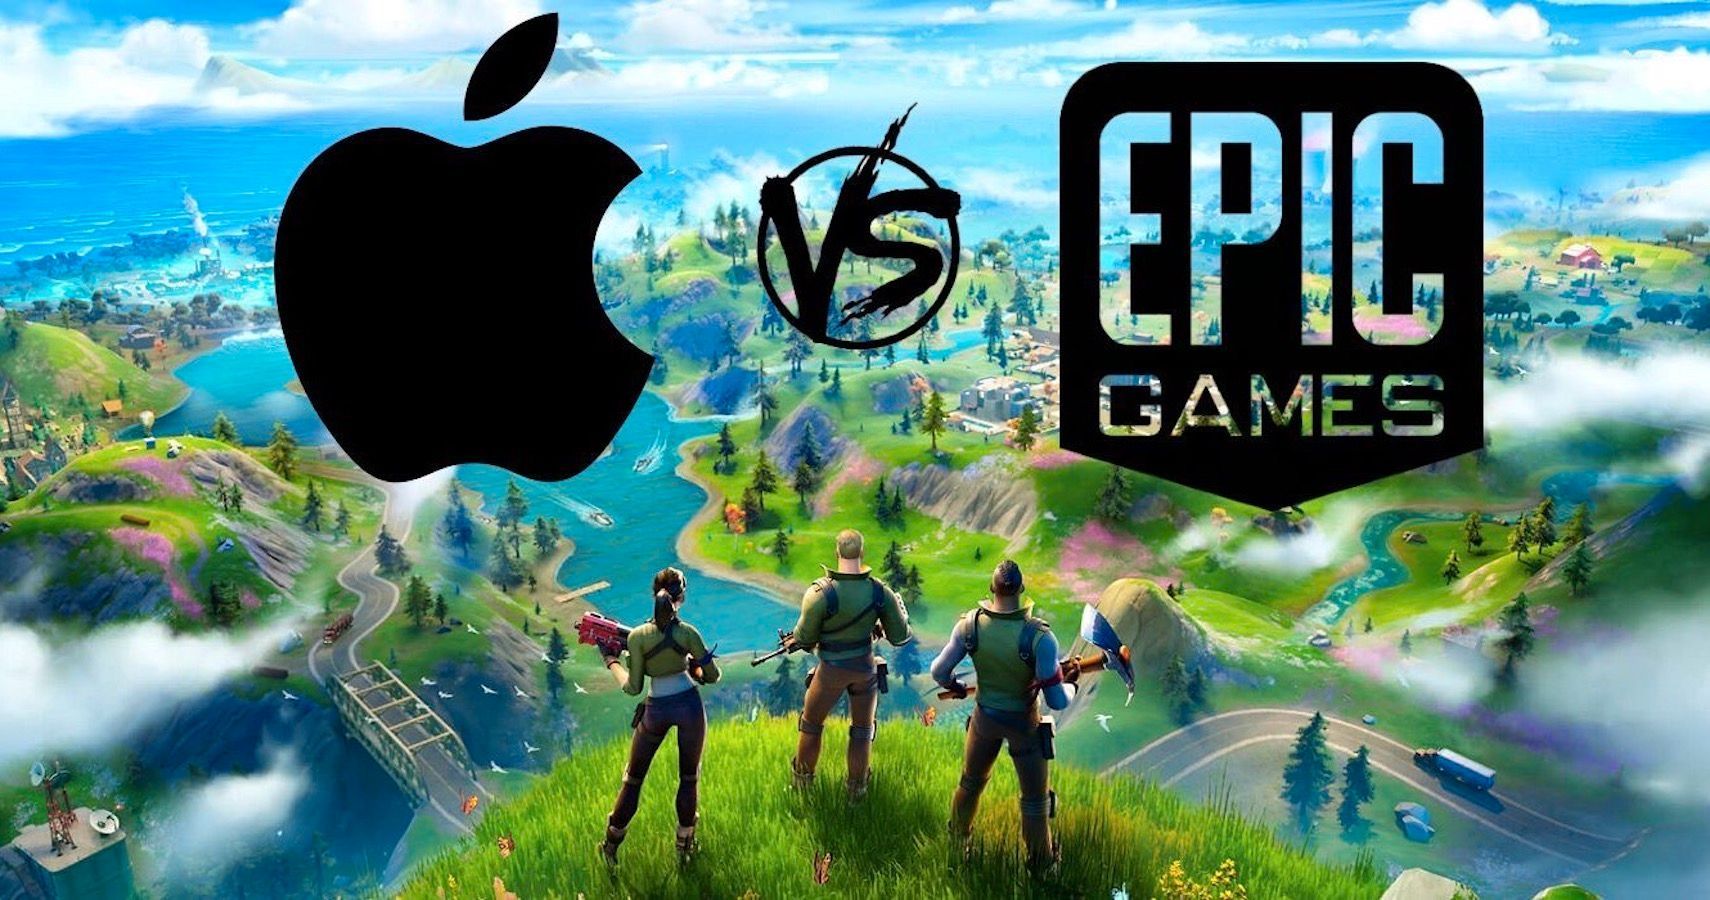 podcast tim cook apple epic games